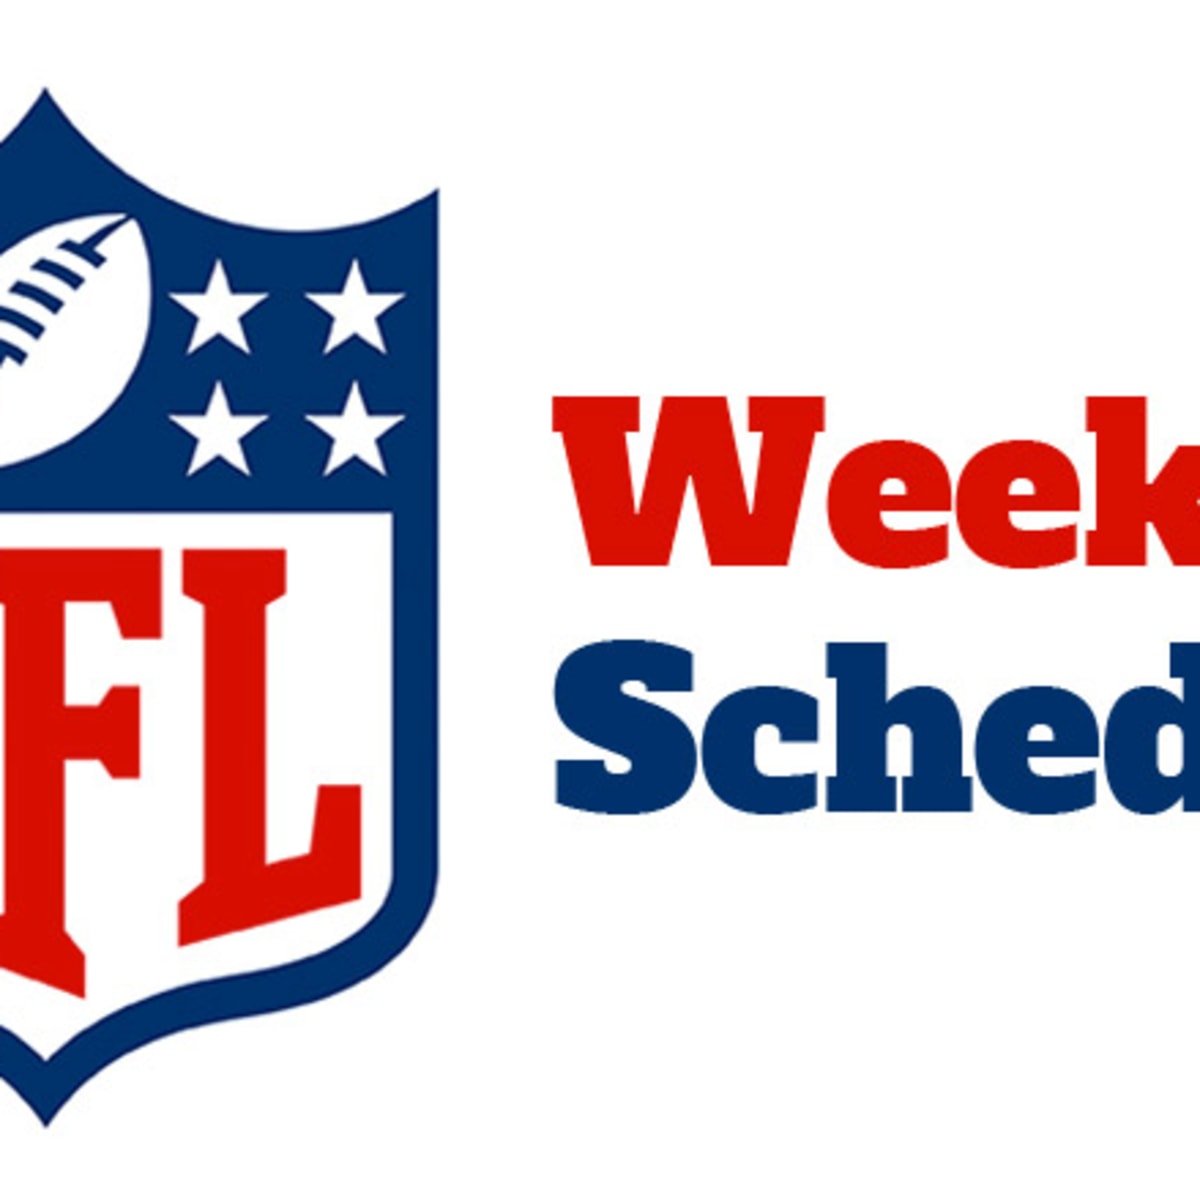 NFL Week 10 Schedule 2022 